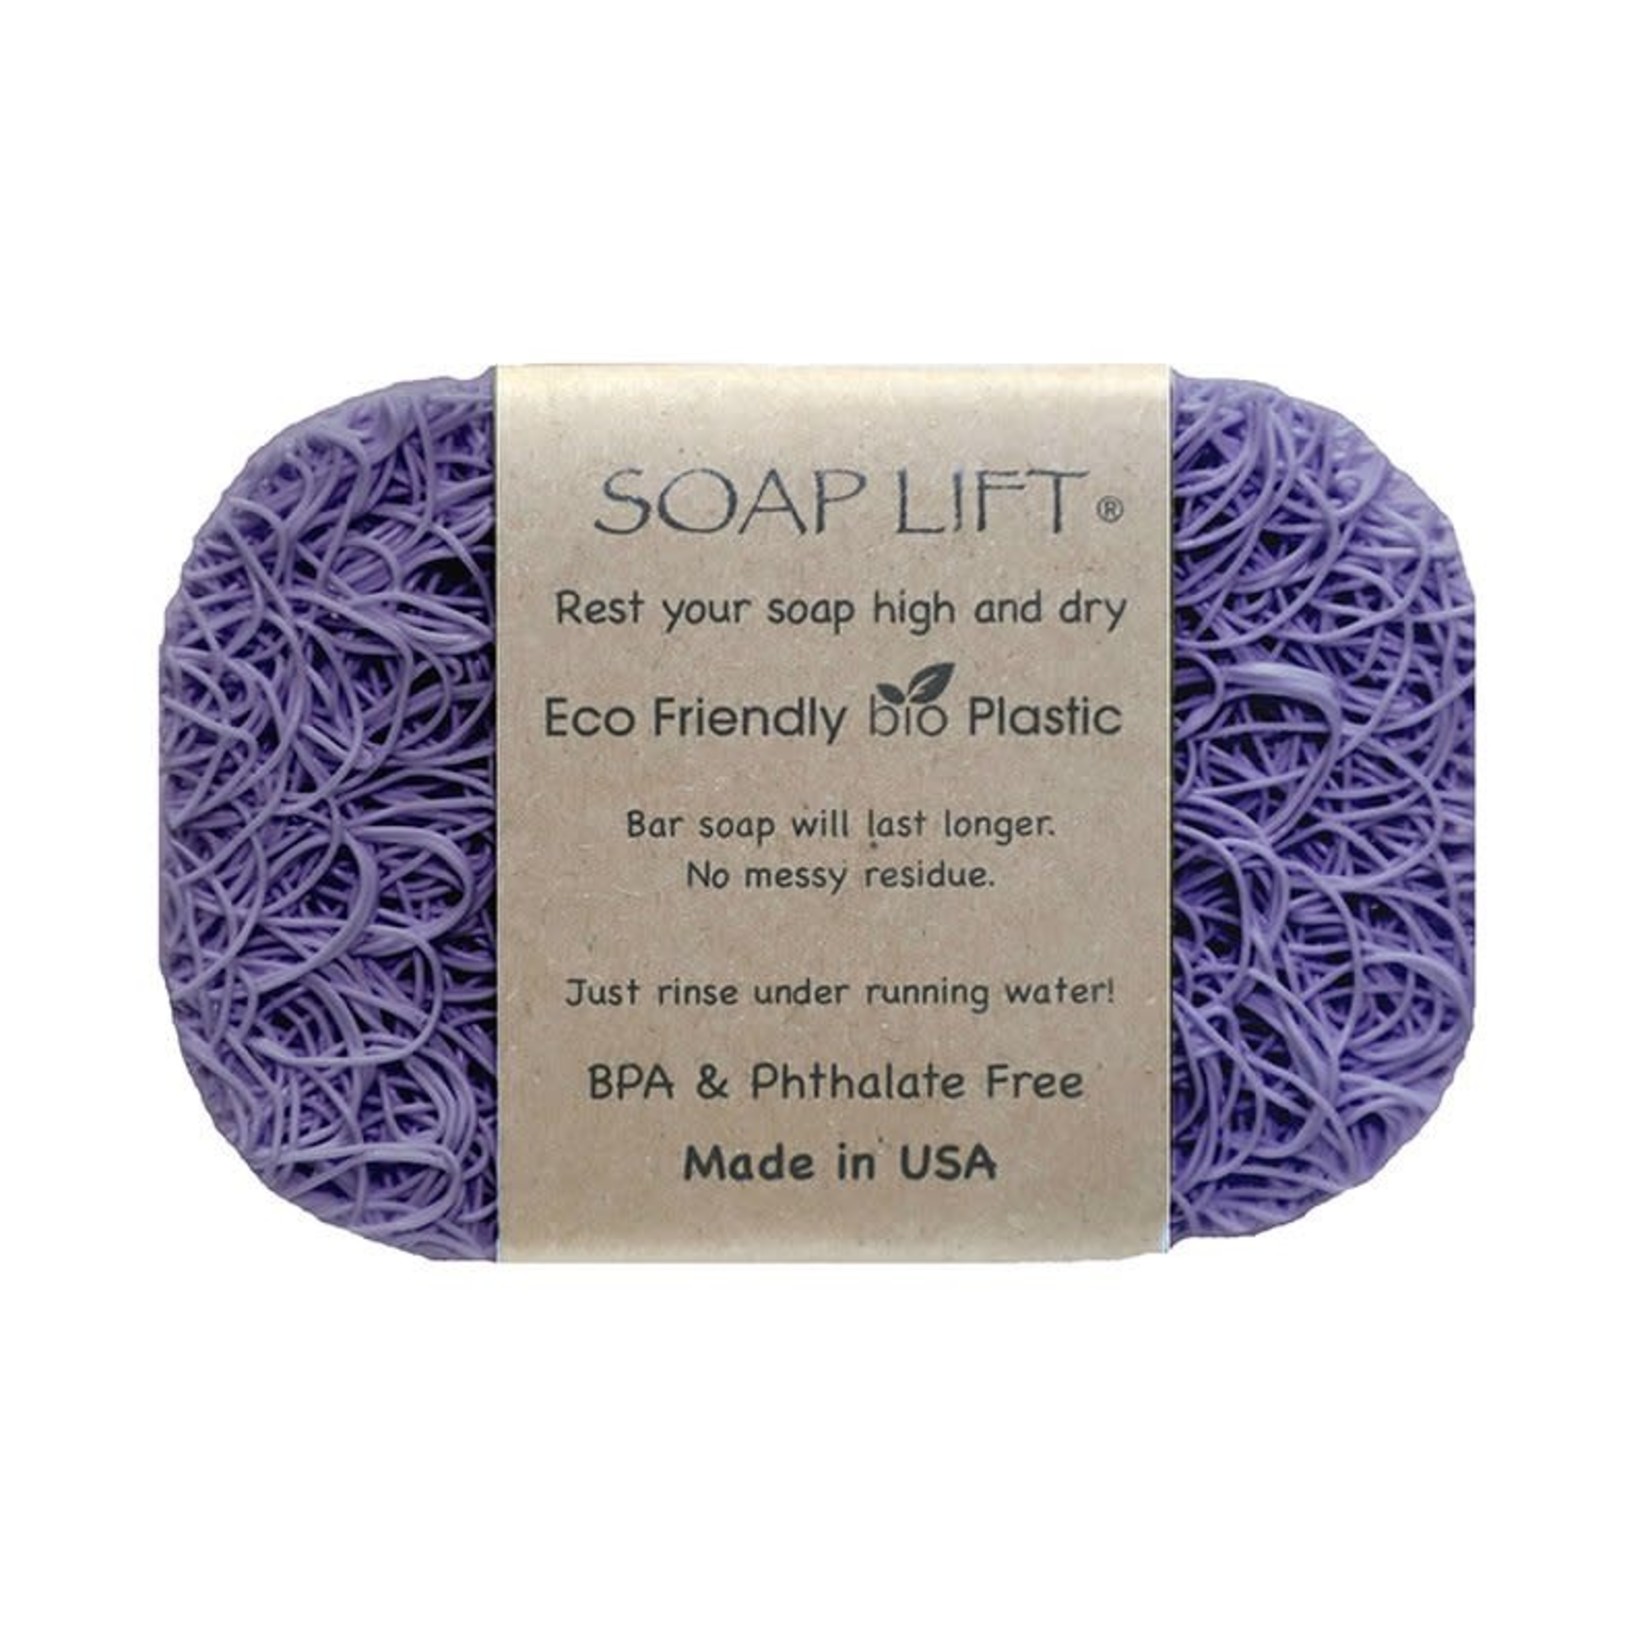 SOAPLIFT SOAP LIFT - Lavender